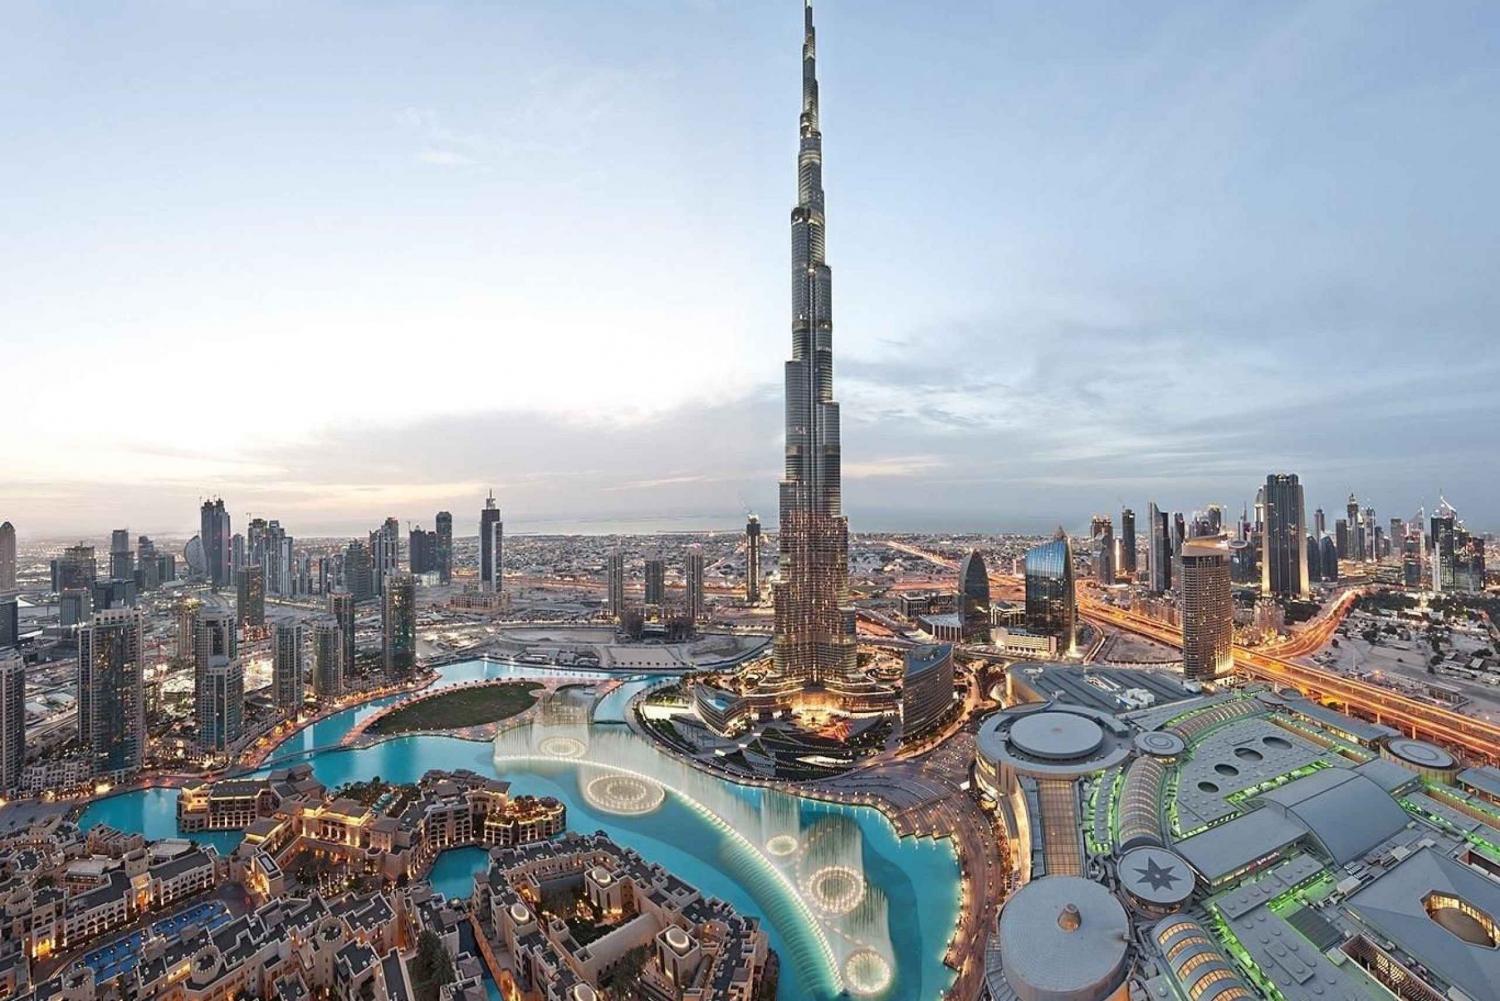 Dubai byrundtur: Hele dagen